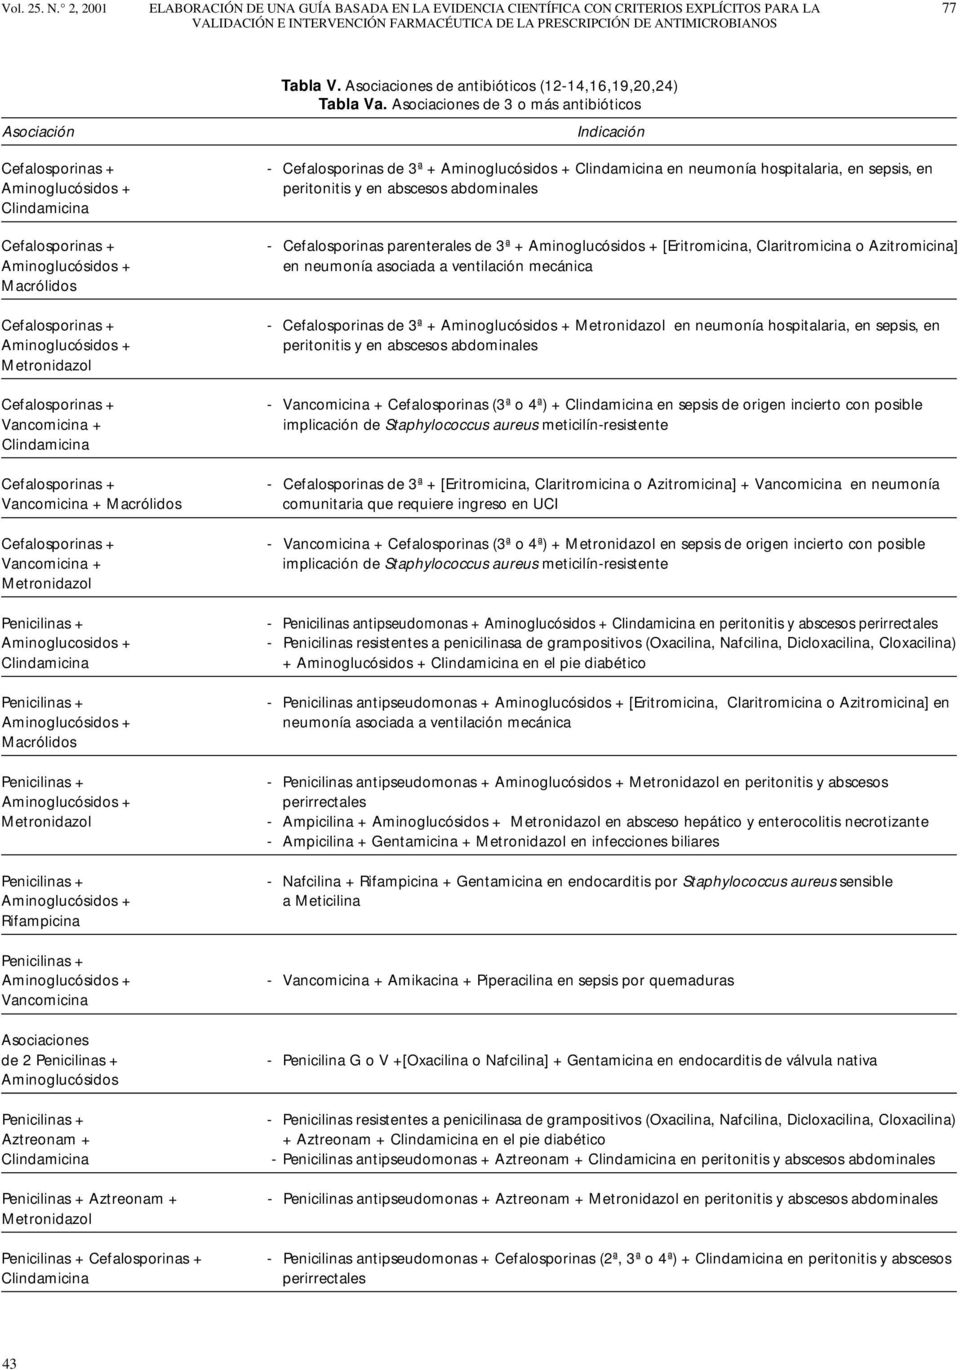 Cefalosporinas + Clindamicina Cefalosporinas + Macrólidos Cefalosporinas + Metronidazol Cefalosporinas + Vancomicina + Clindamicina Cefalosporinas + Vancomicina + Macrólidos Cefalosporinas +